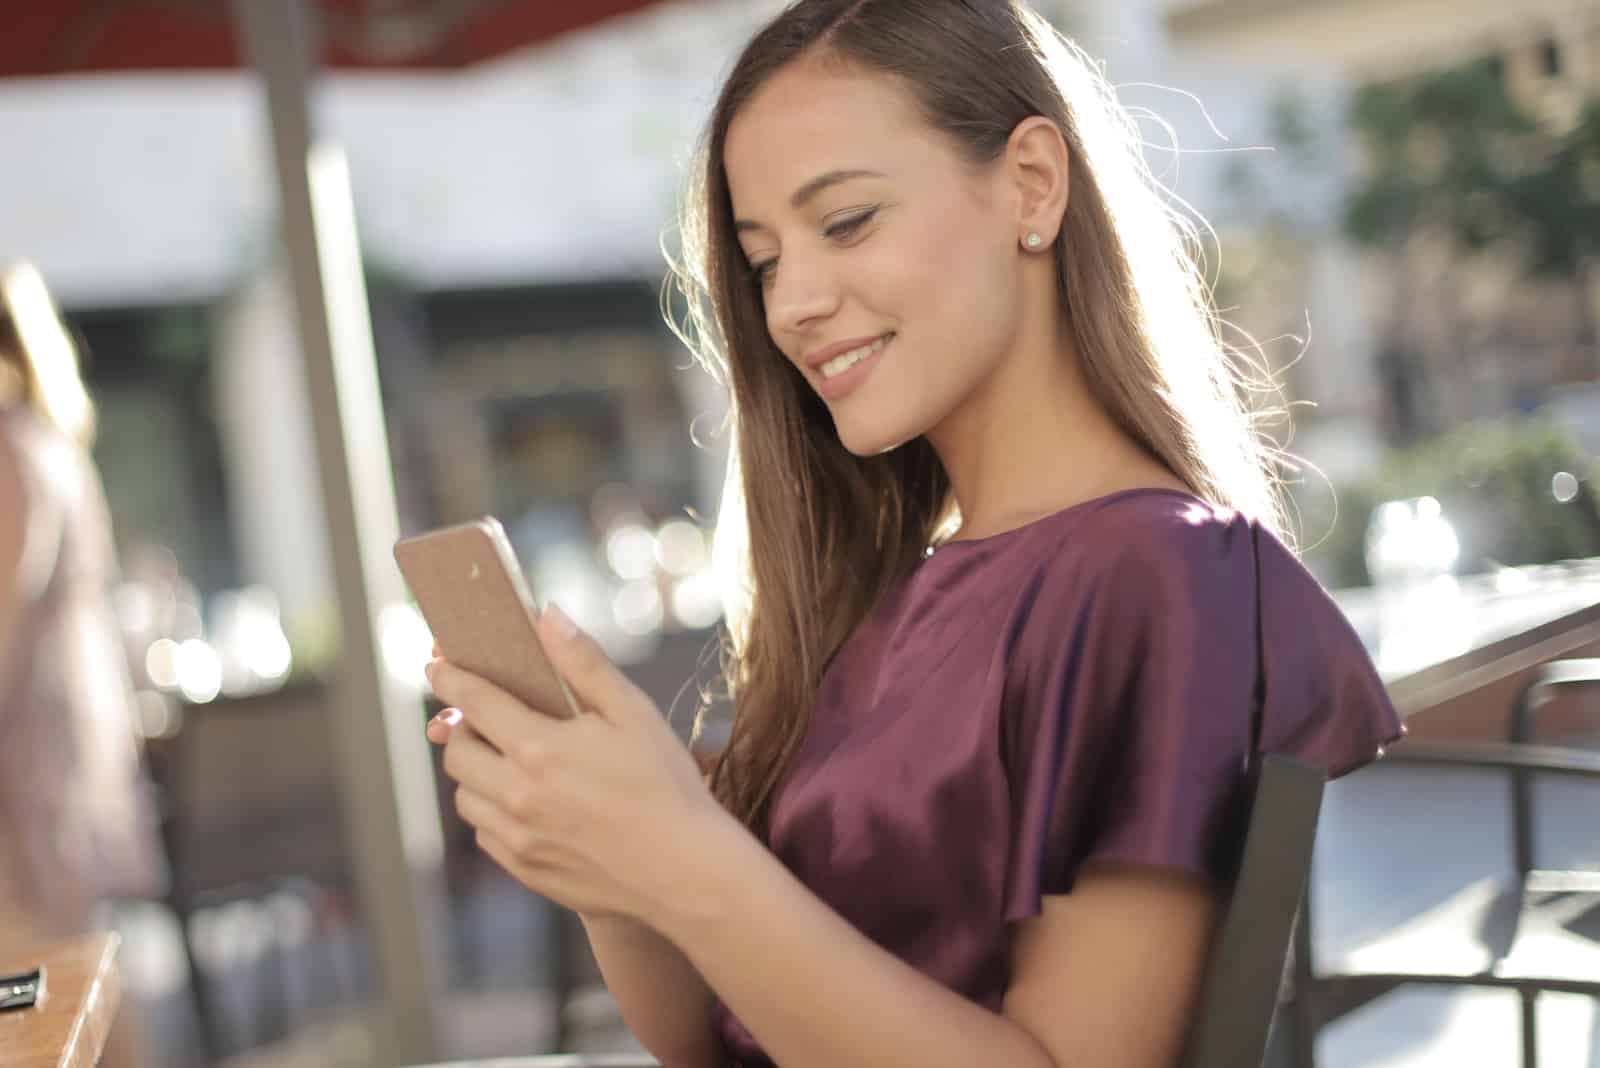 femme heureuse séance extérieur regarder smartphone